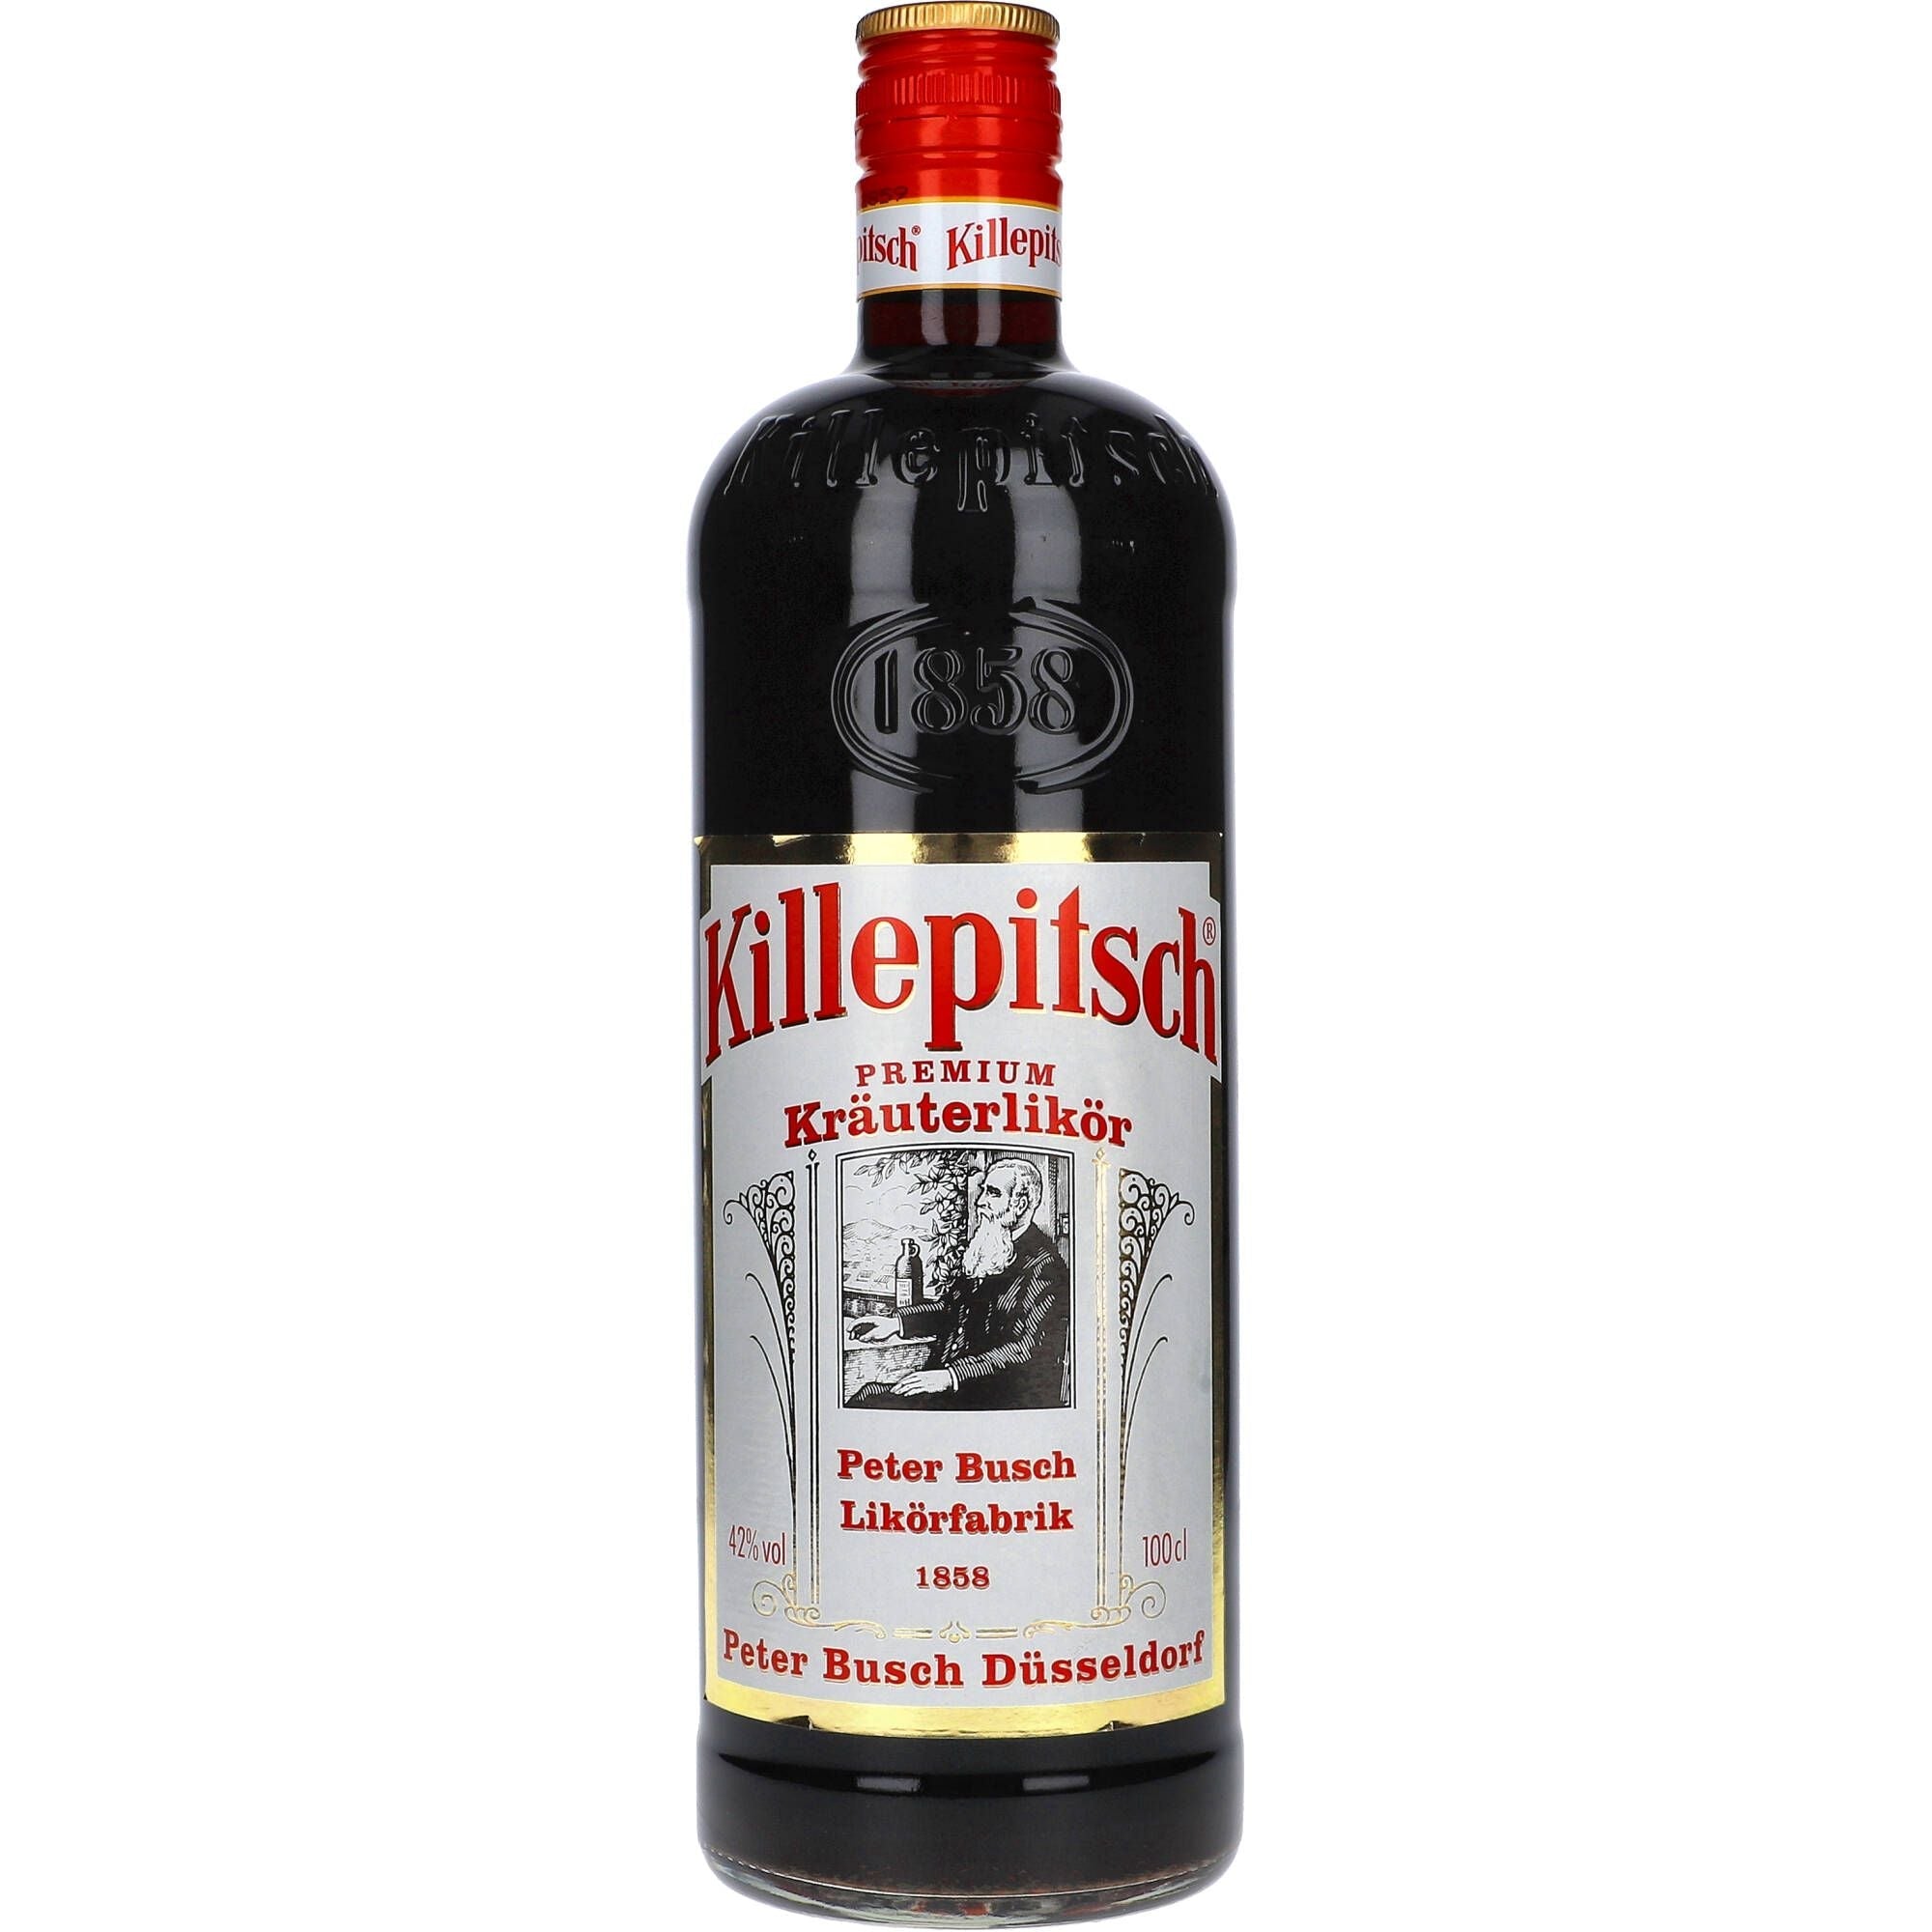 Killepitsch 1 AllSpirits – 42% ltr